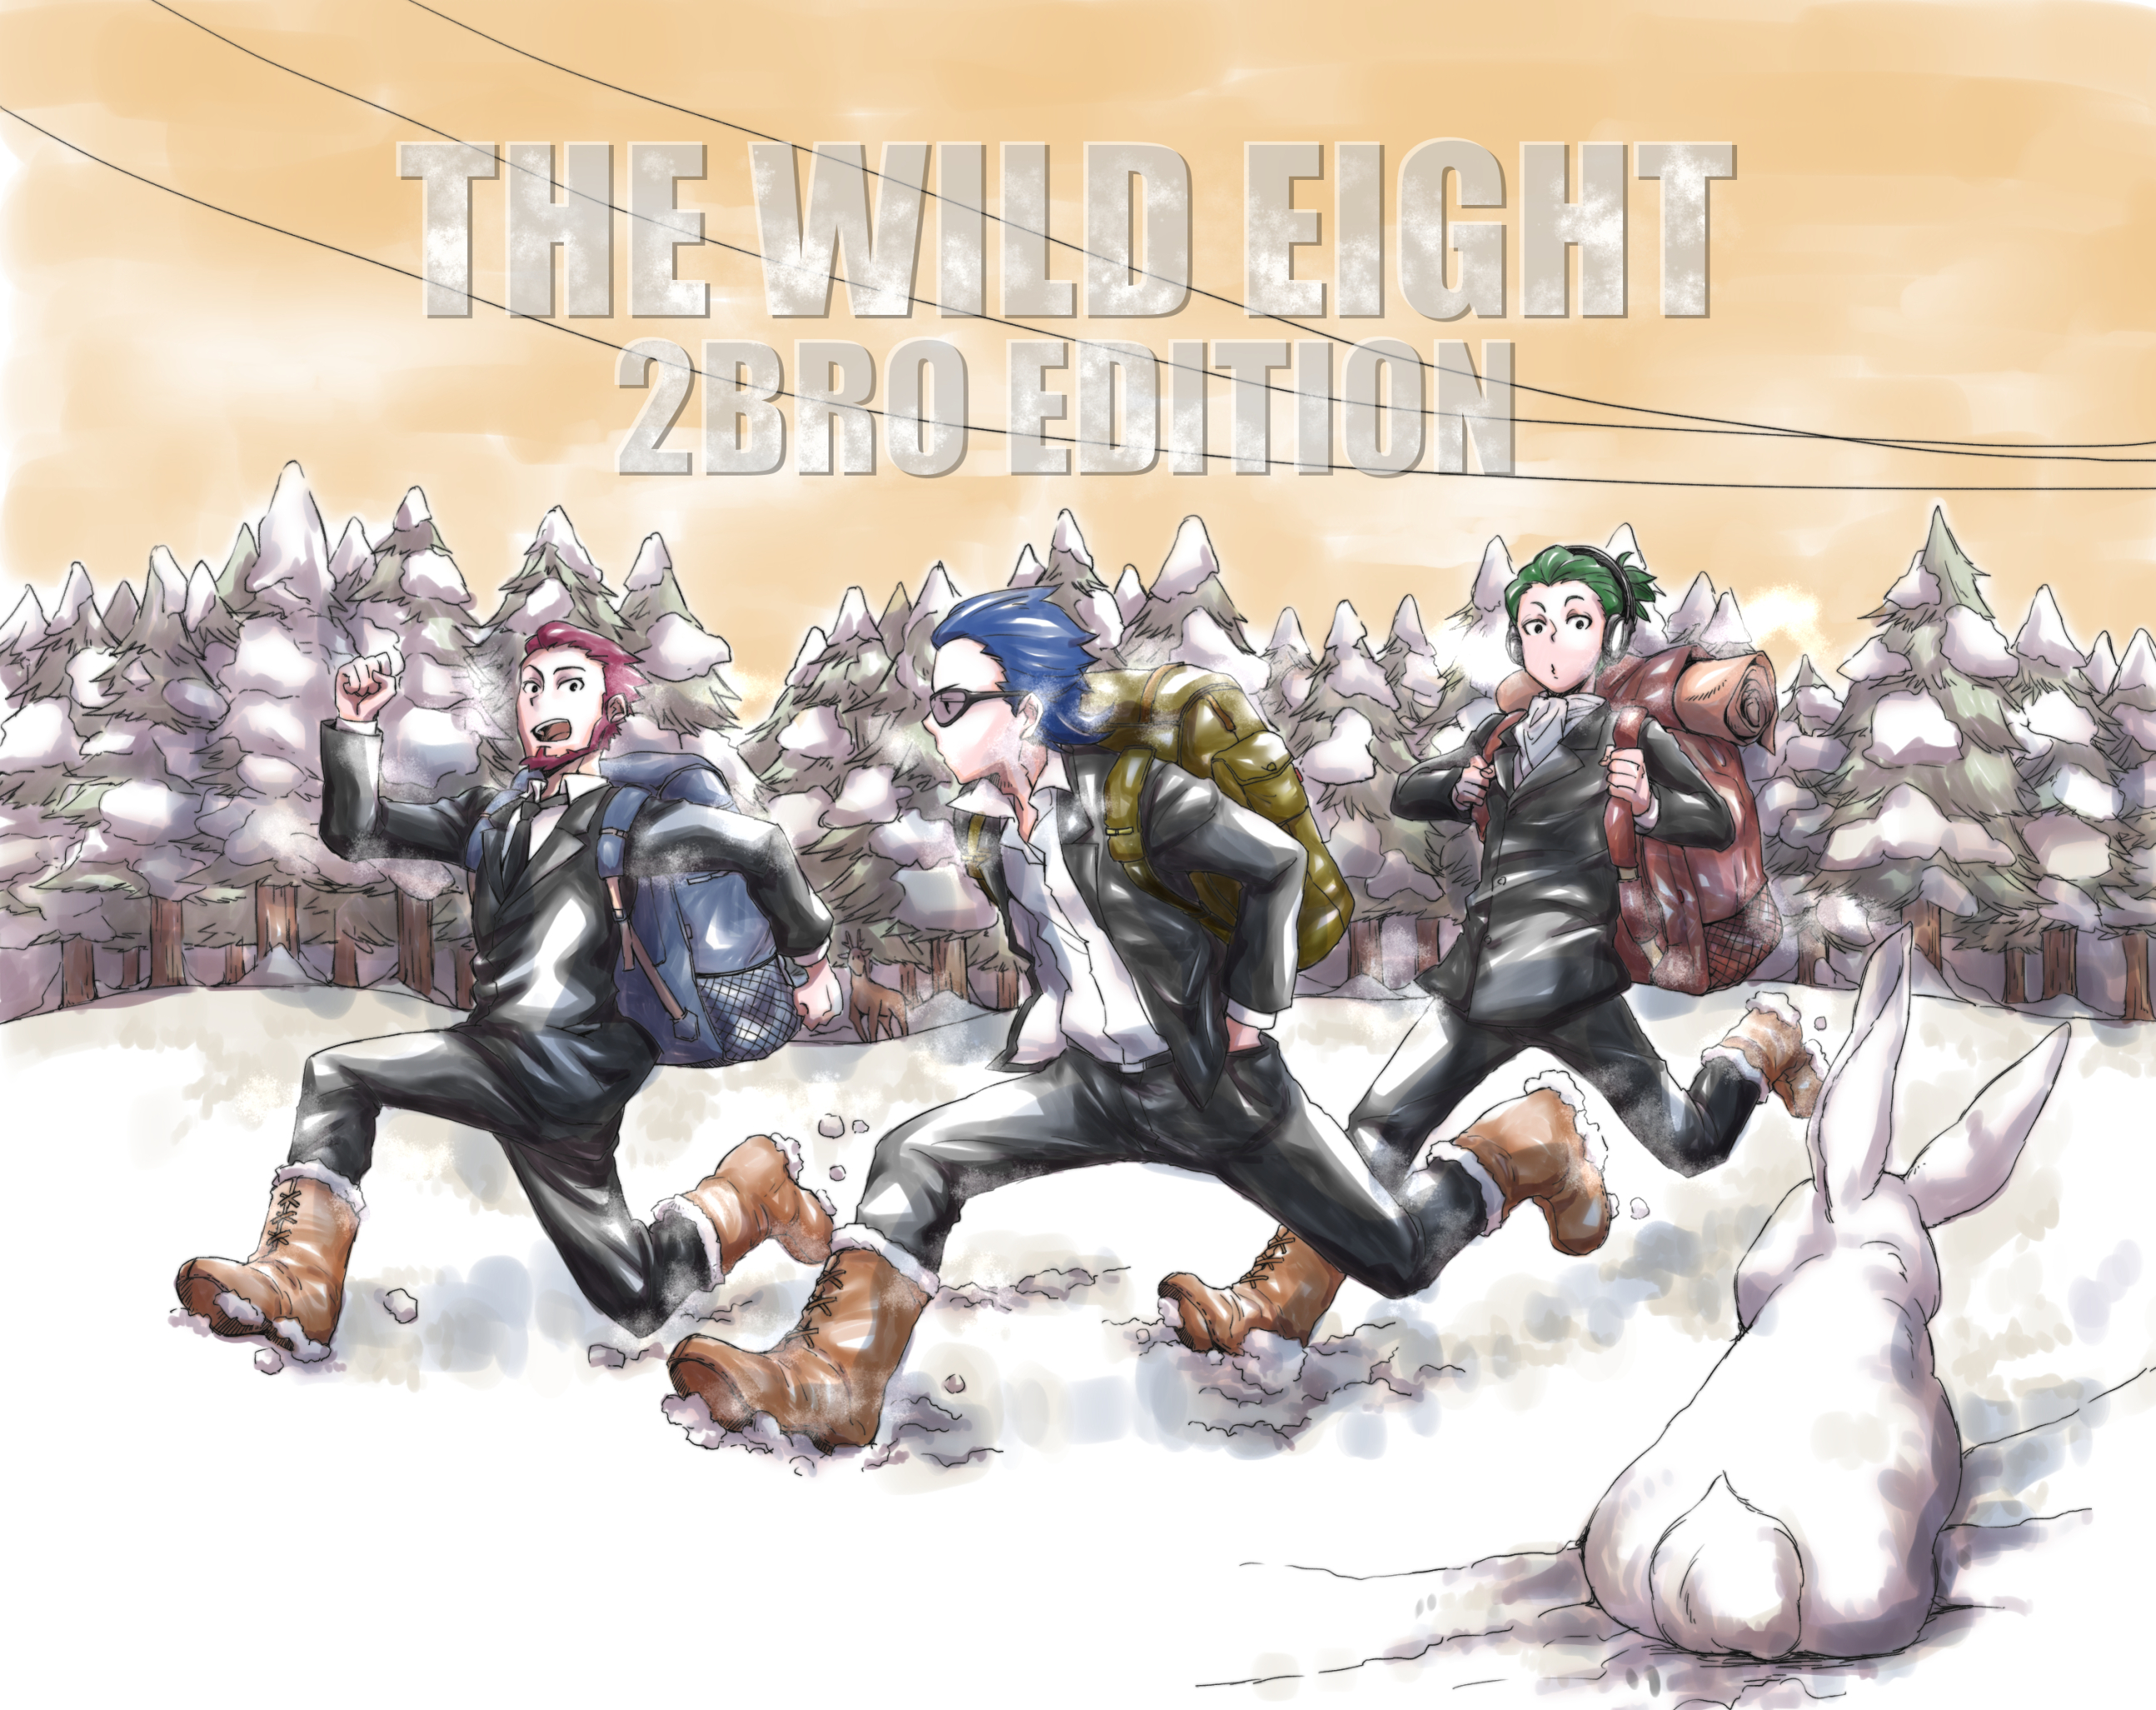 The Wild Eight - 2BRO.EDITION